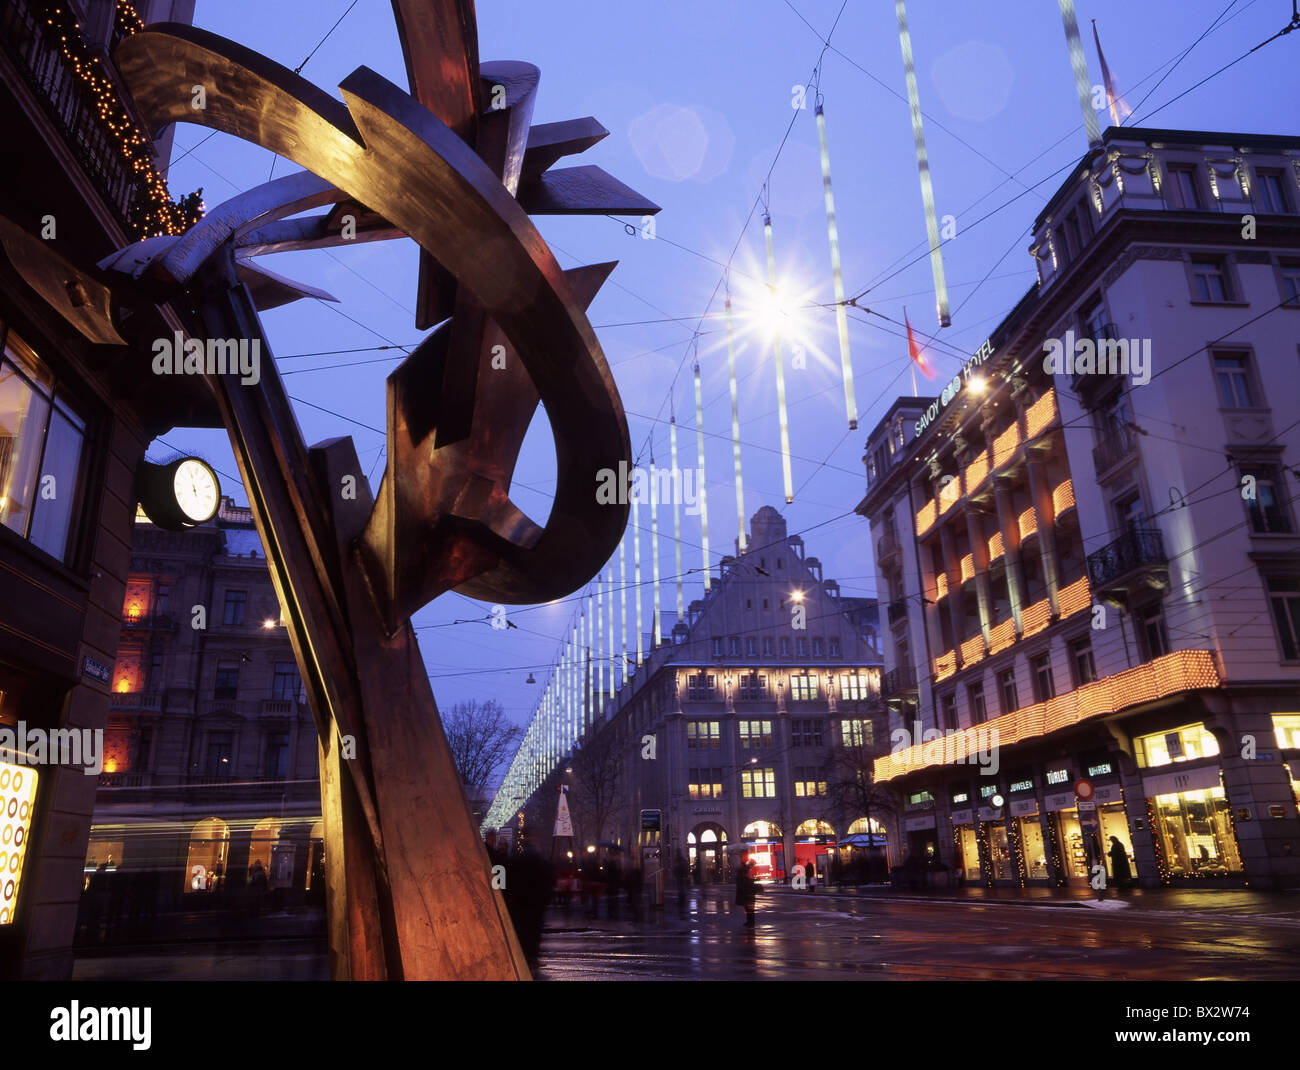 Città di Zurigo città di notte notte invernale di Natale Natale illuminazione illuminazione Bahnhofstrasse scultura perso Foto Stock